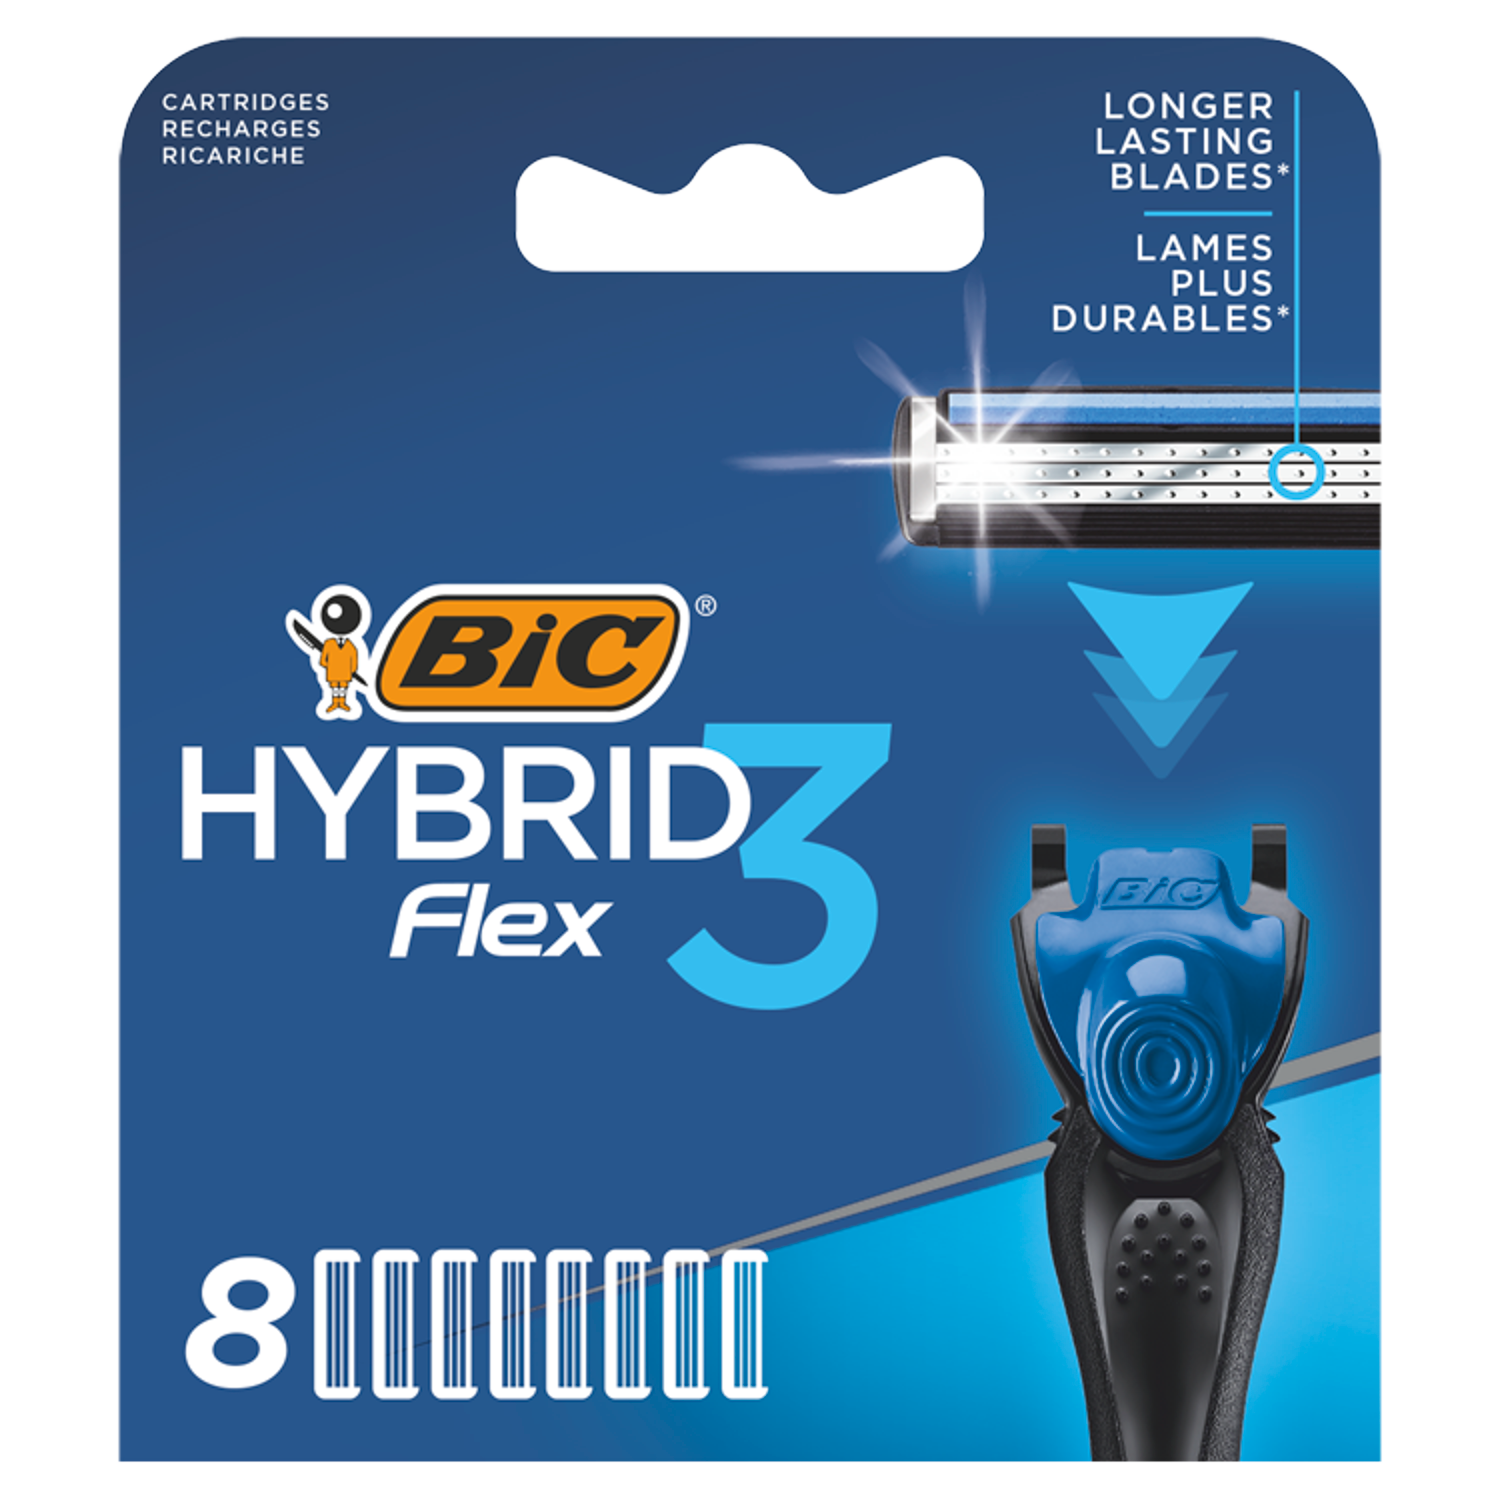 Bic Hybrid3 Flex картриджи для бритвы, 8 шт./1 упаковка